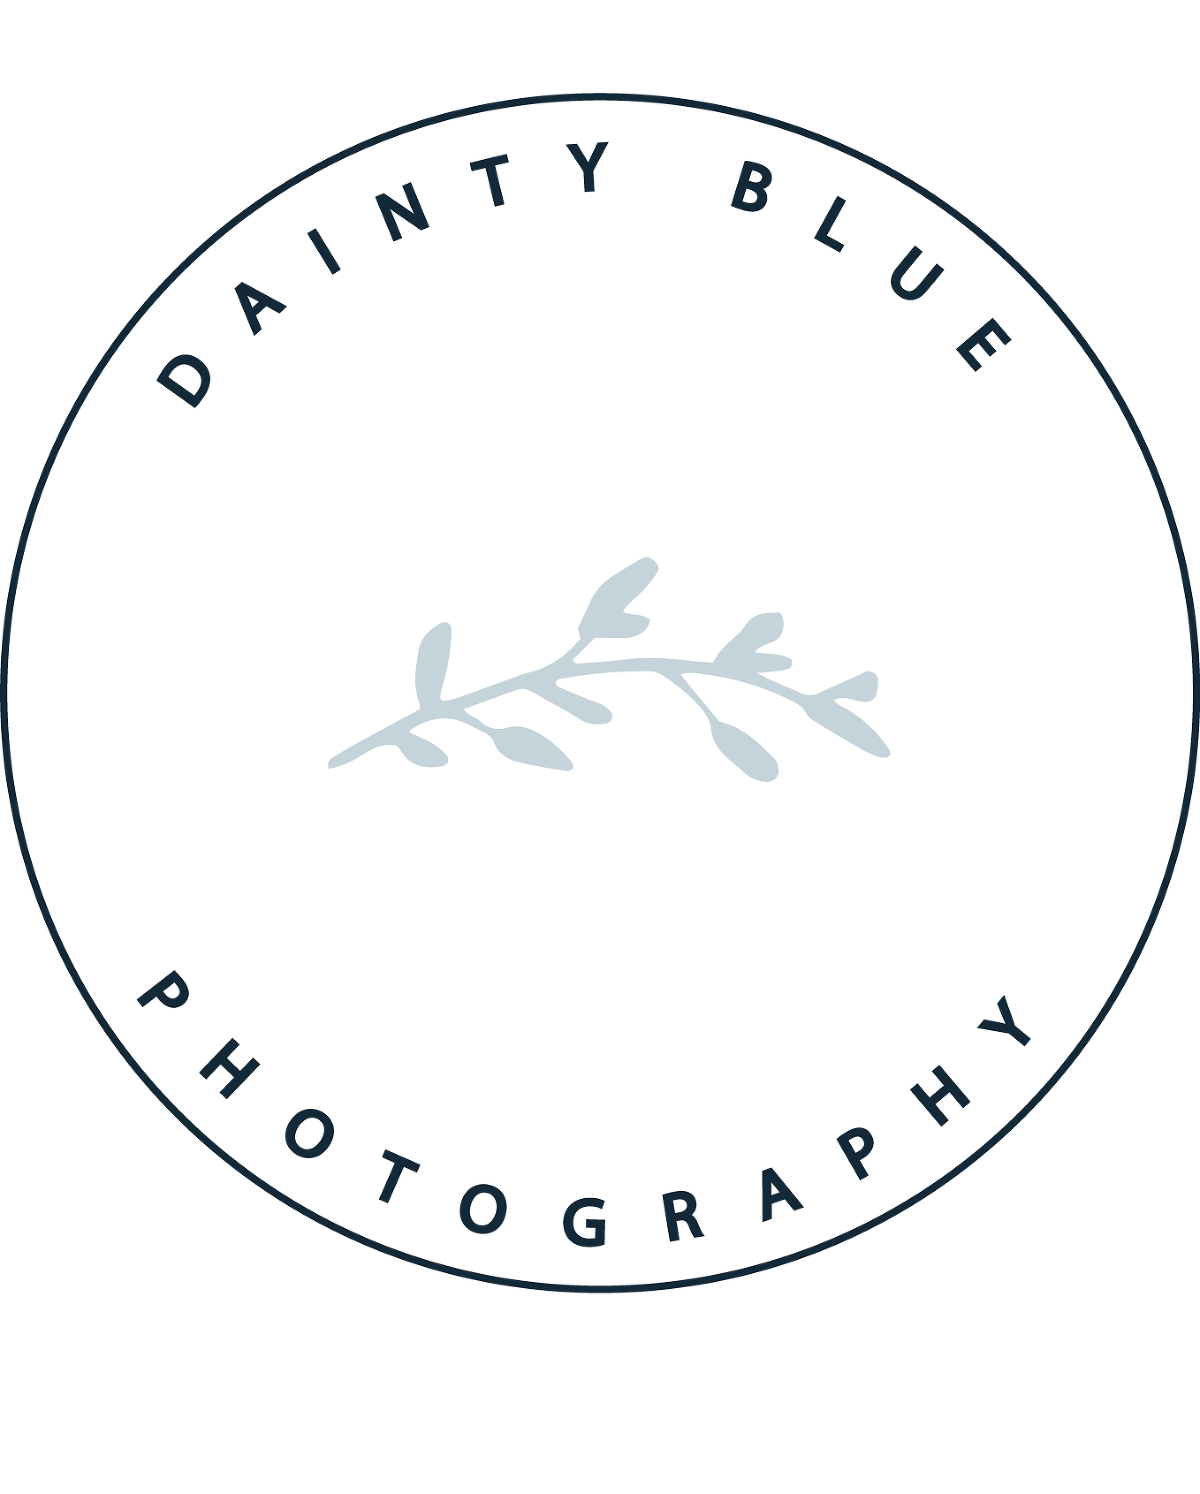 Dainty Blue Photography Logo